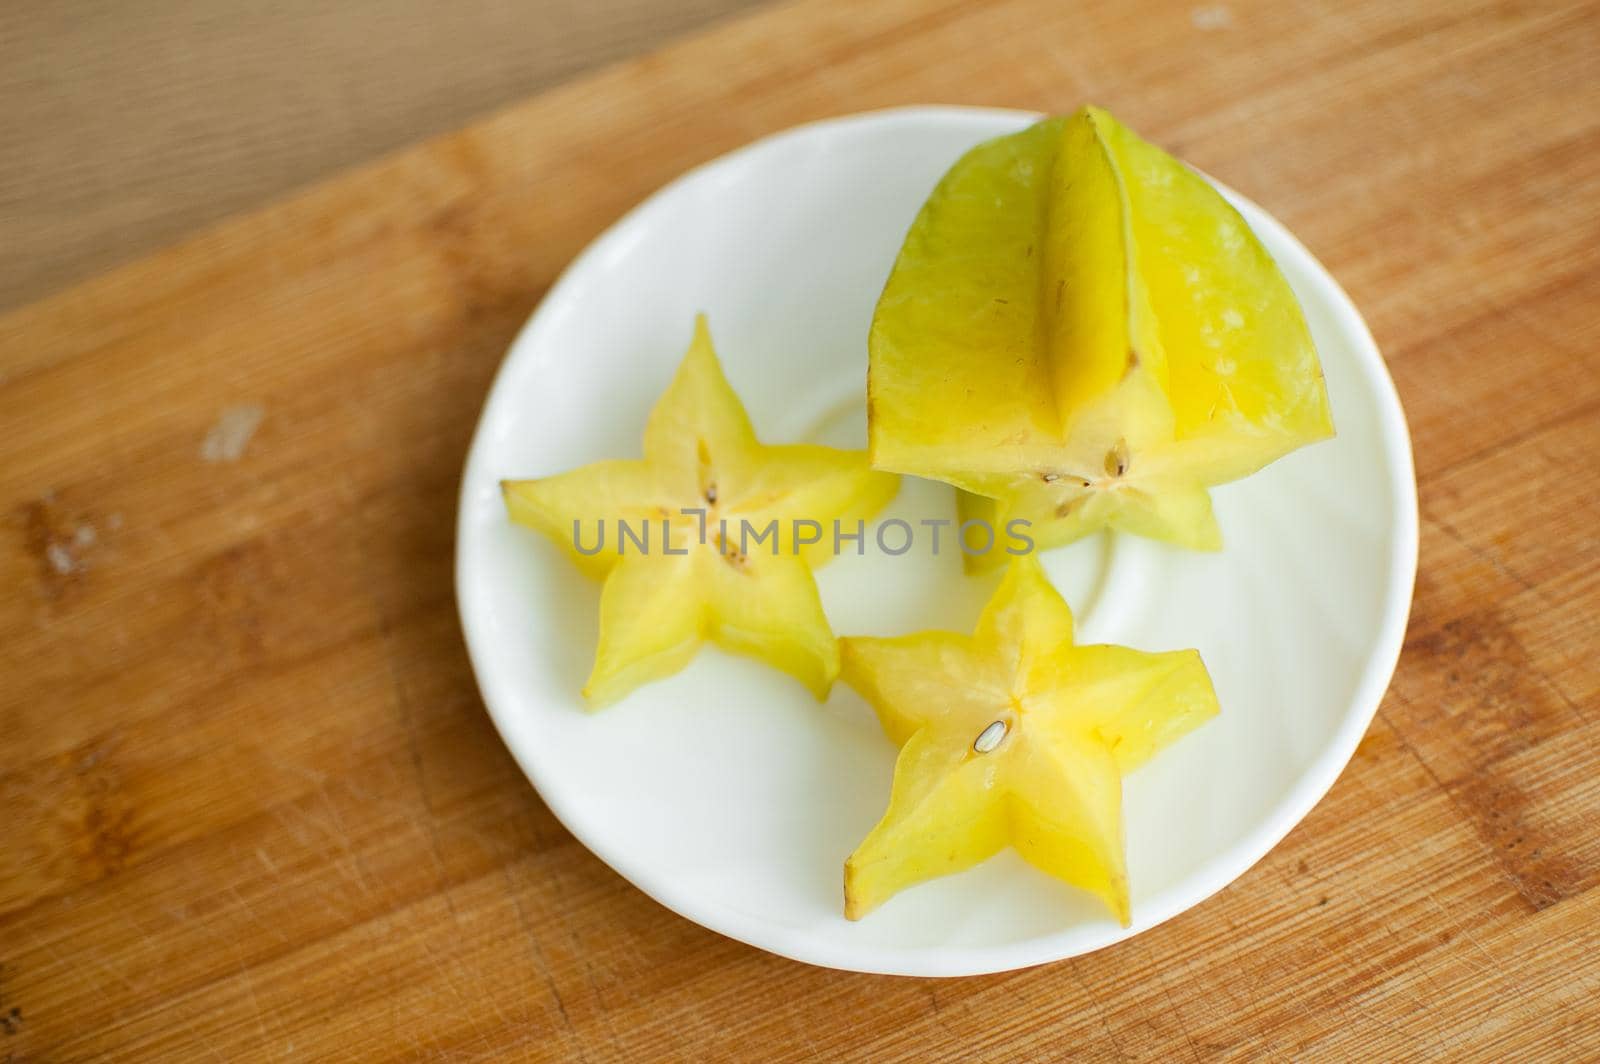 Exotic starfruit or averrhoa carambola on white plate on wooden cut board. Healthy food, fresh organic star apple fruit